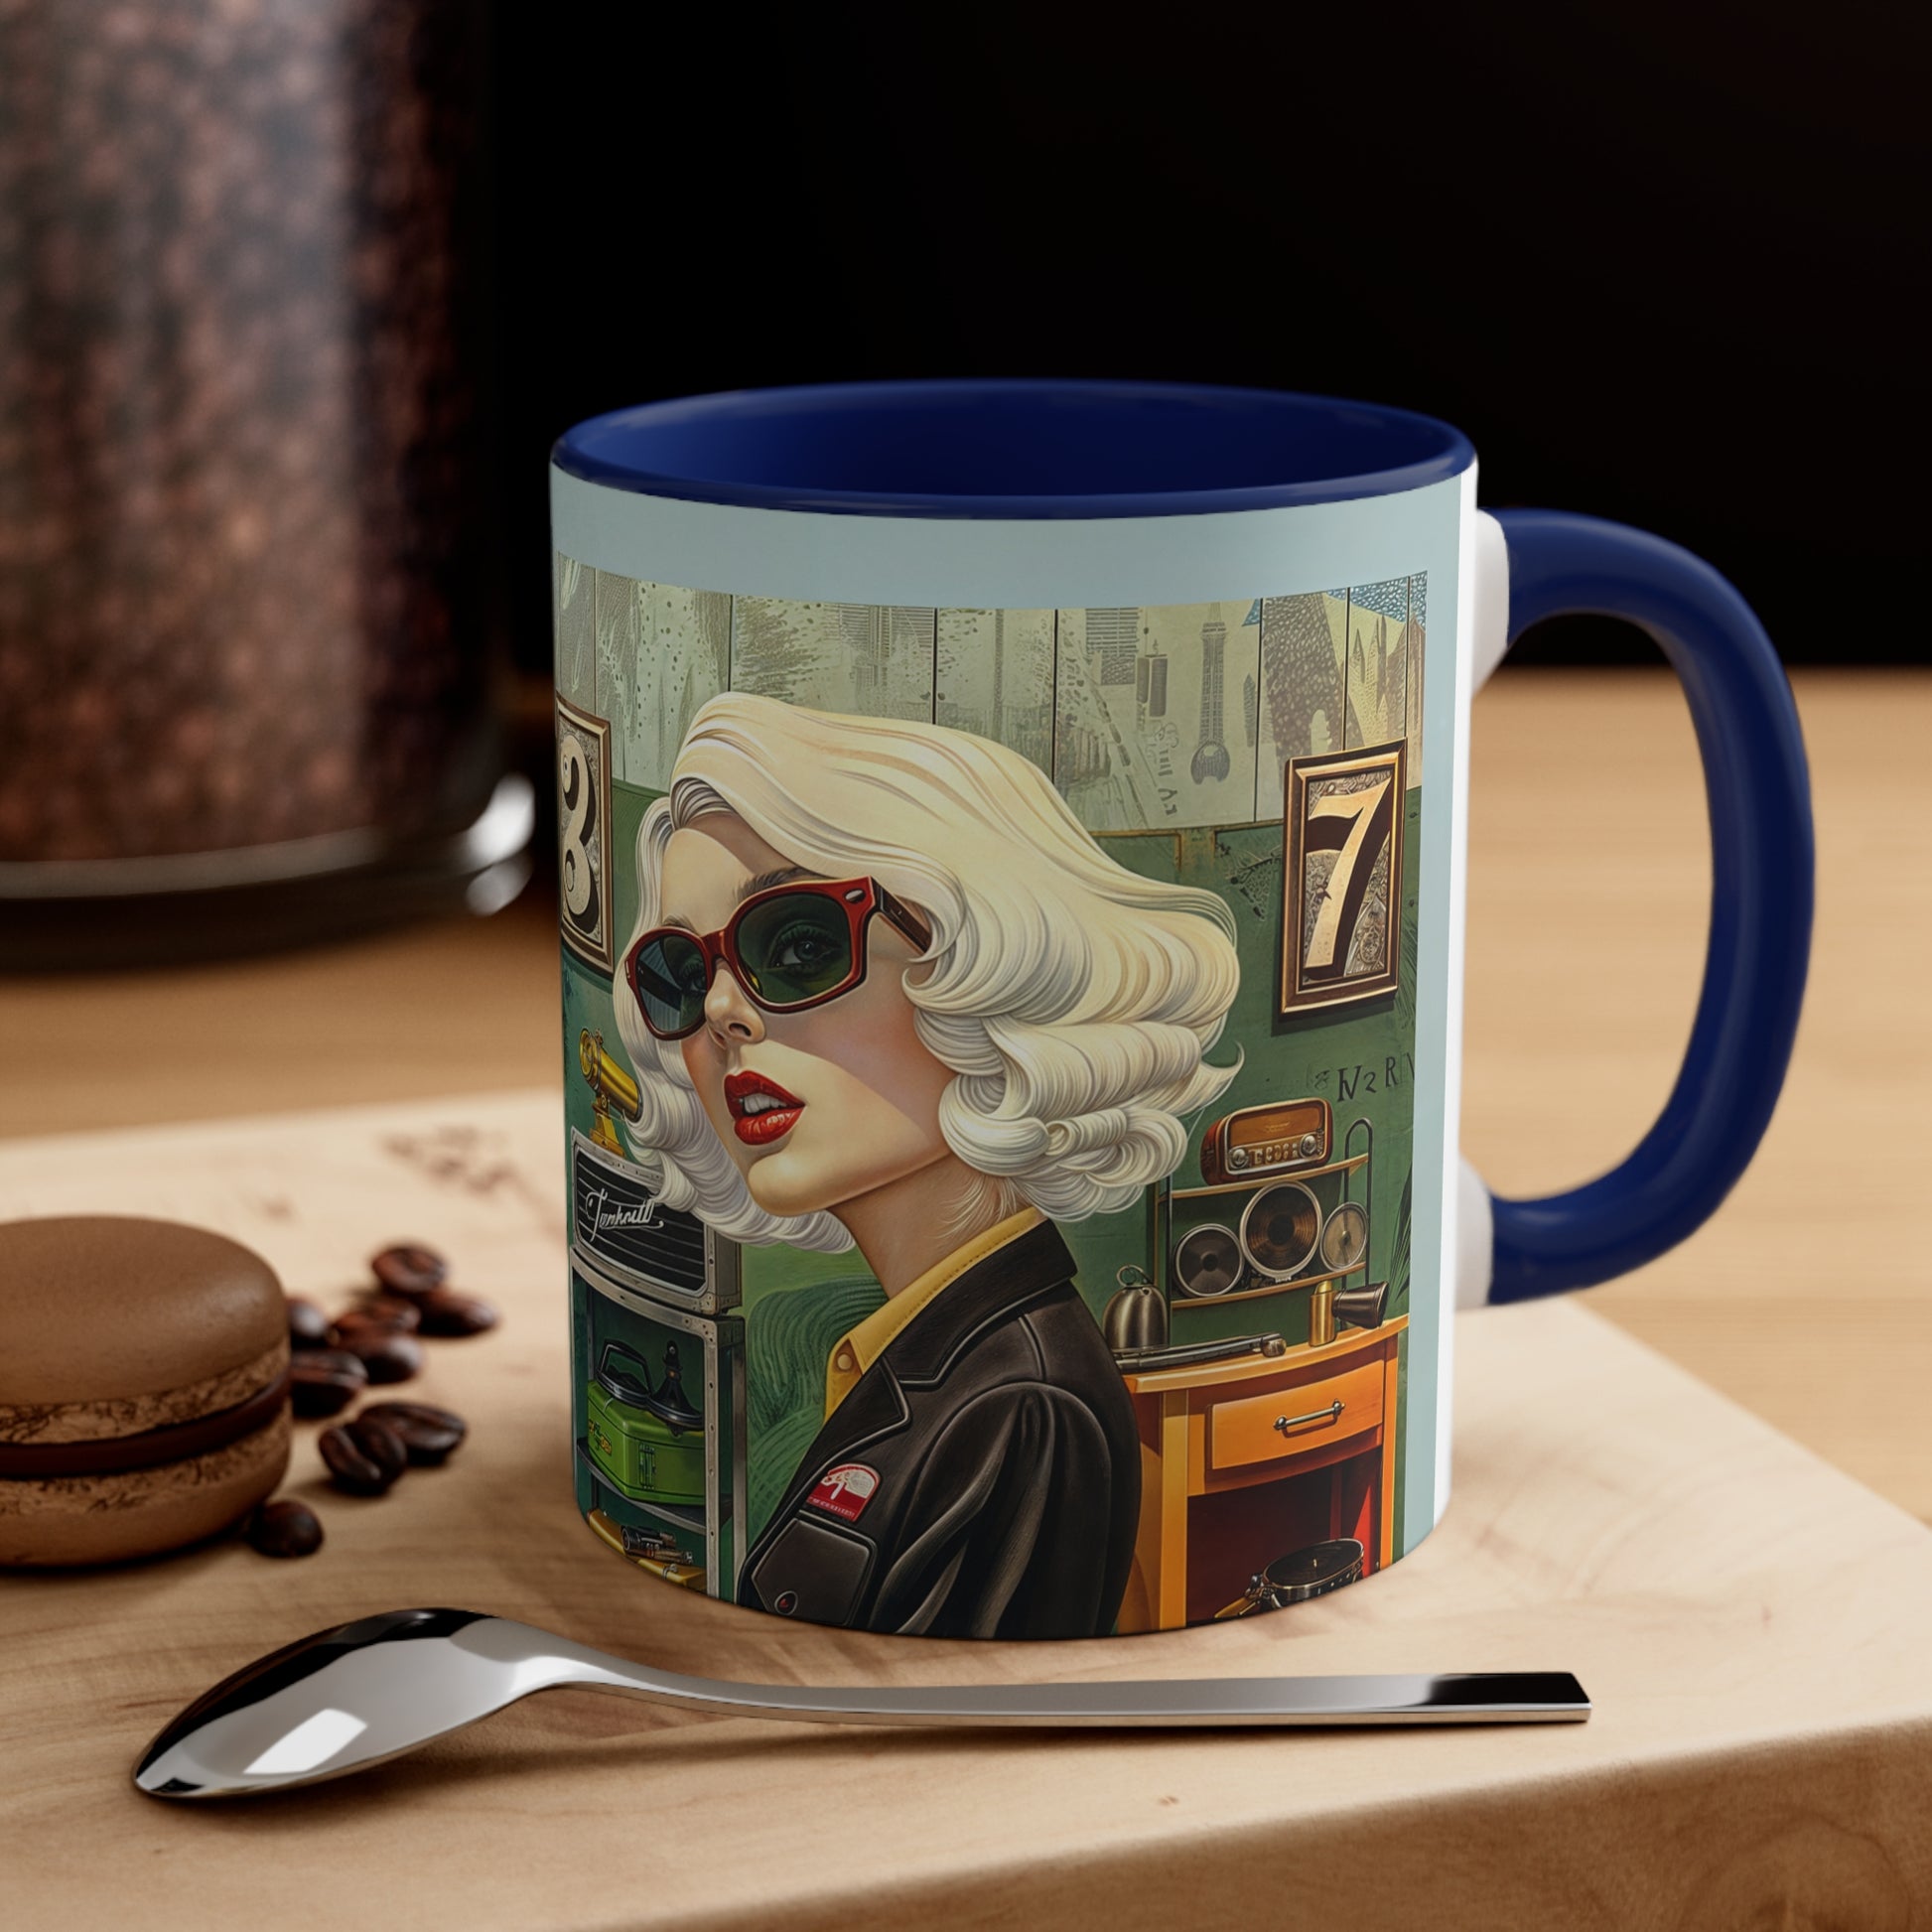 Accent Coffee Mug, 11oz - Tool Time Blonde-naby in situ